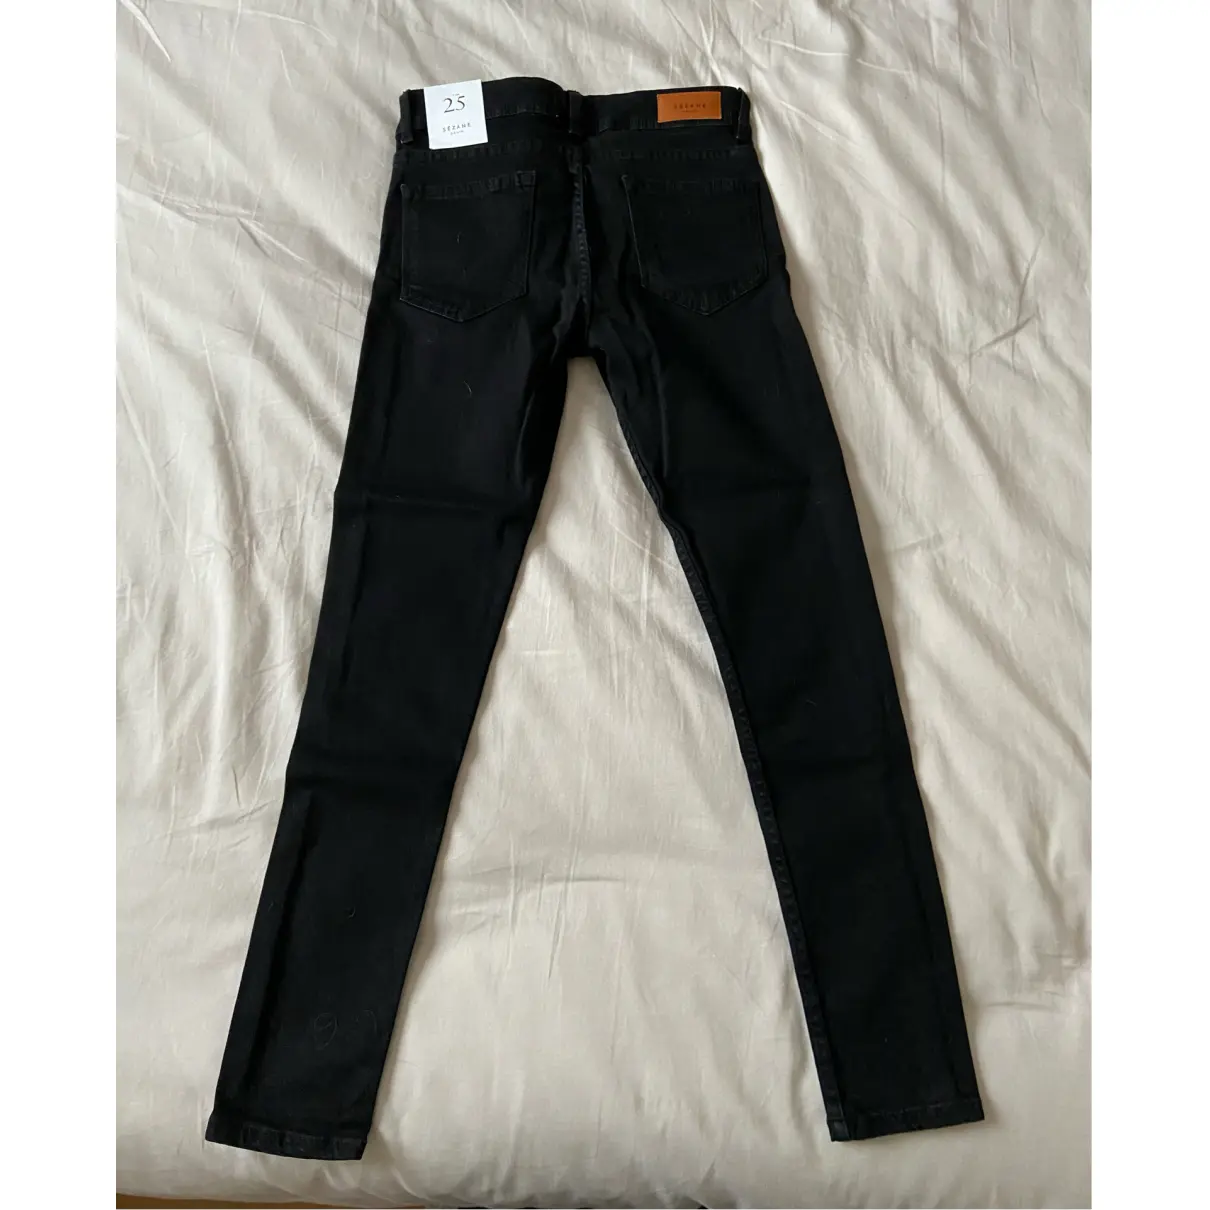 Buy Sézane Slim jeans online